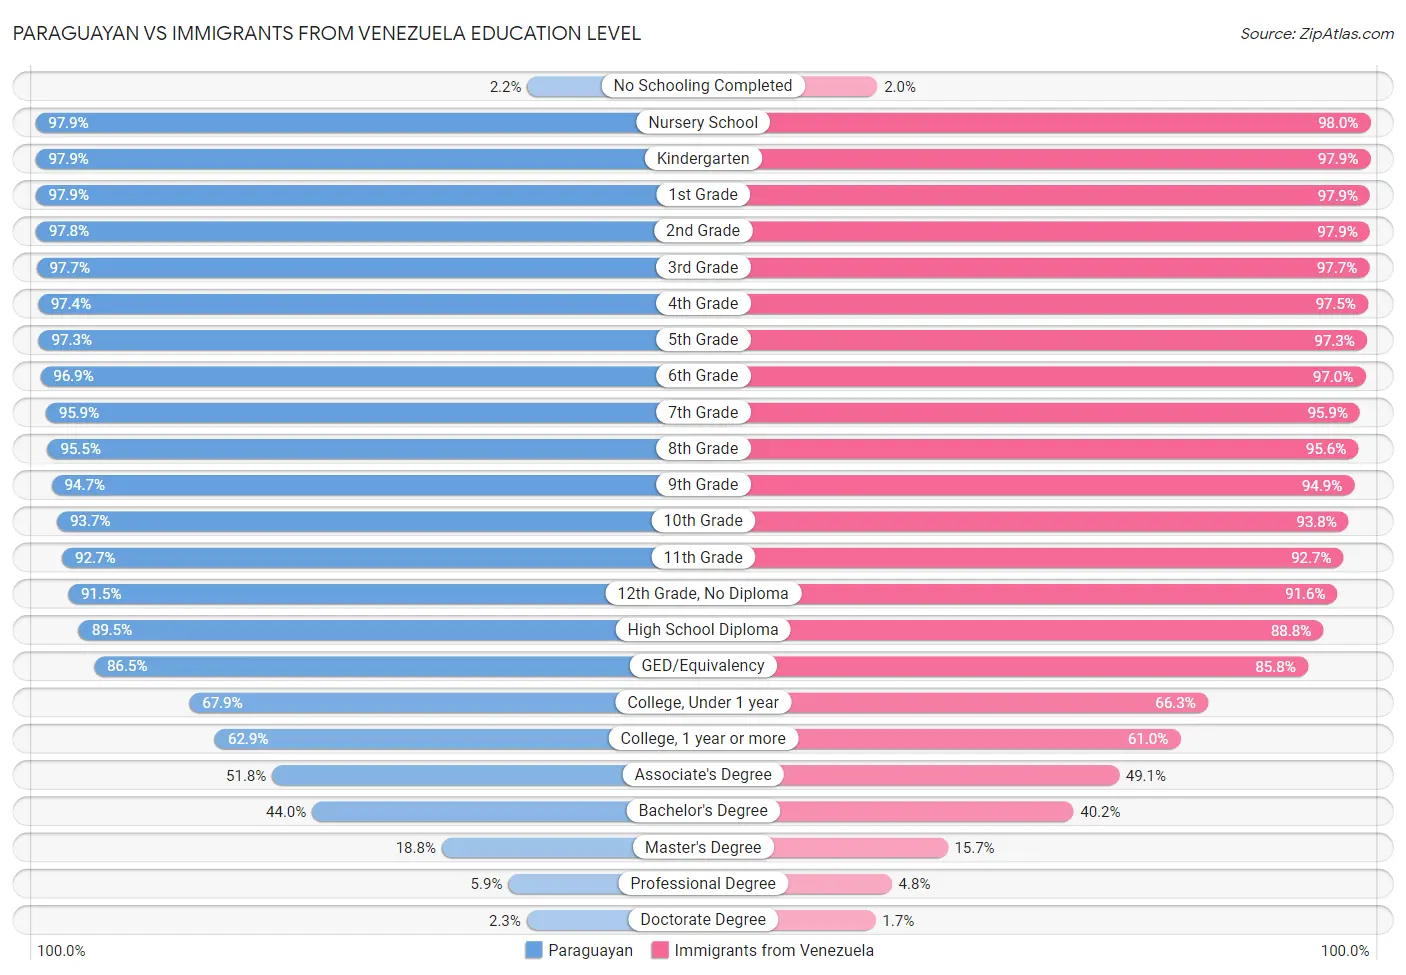 Paraguayan vs Immigrants from Venezuela Education Level